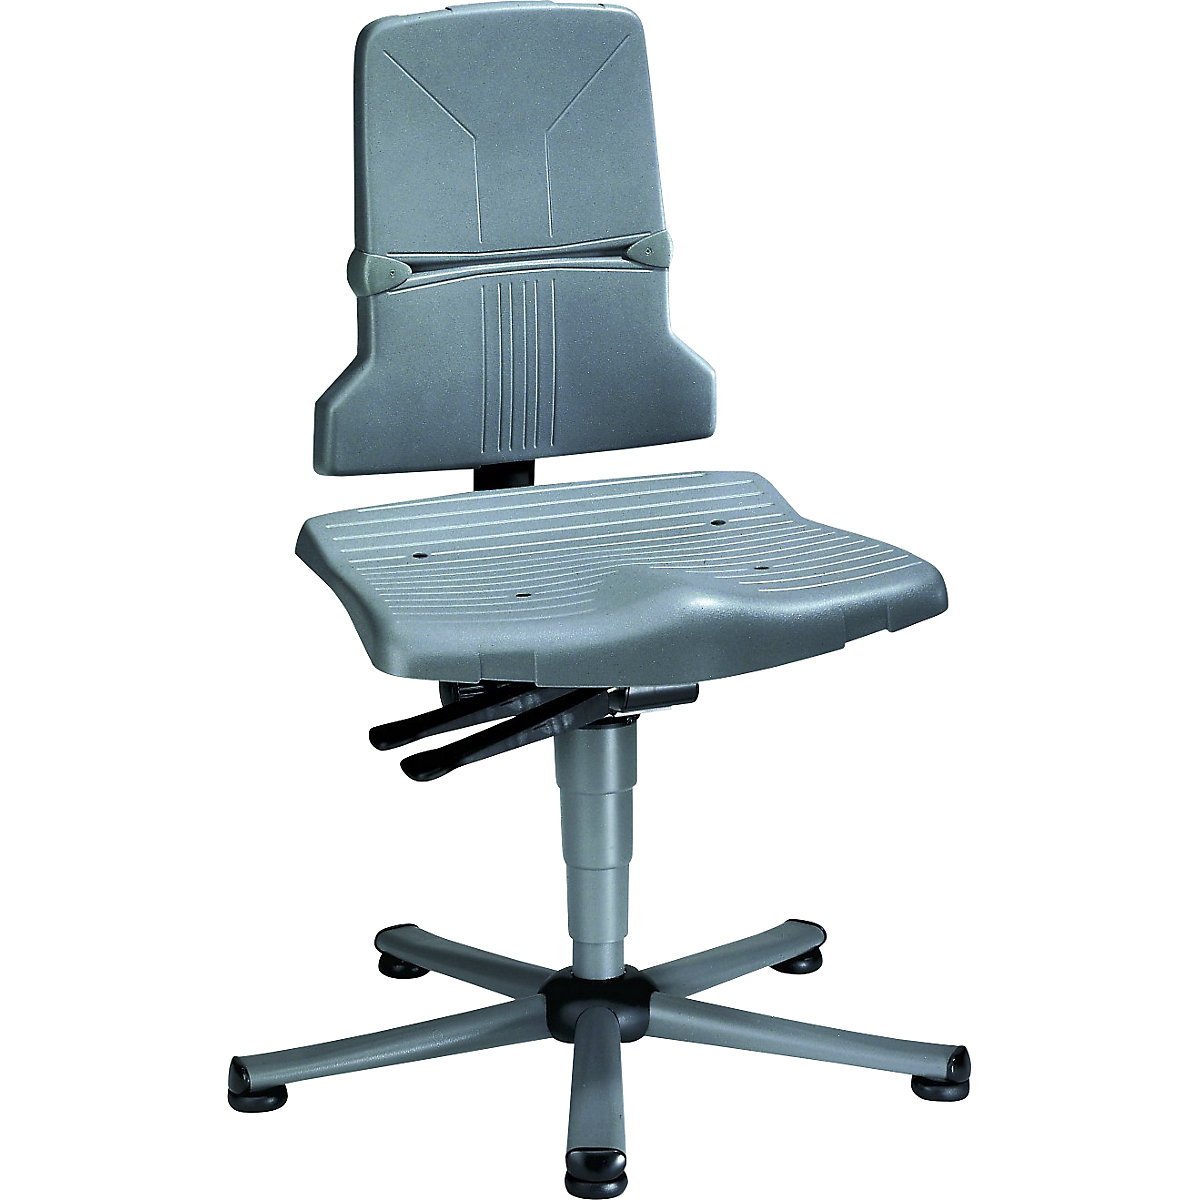 Pracovní otočná židle SINTEC – bimos